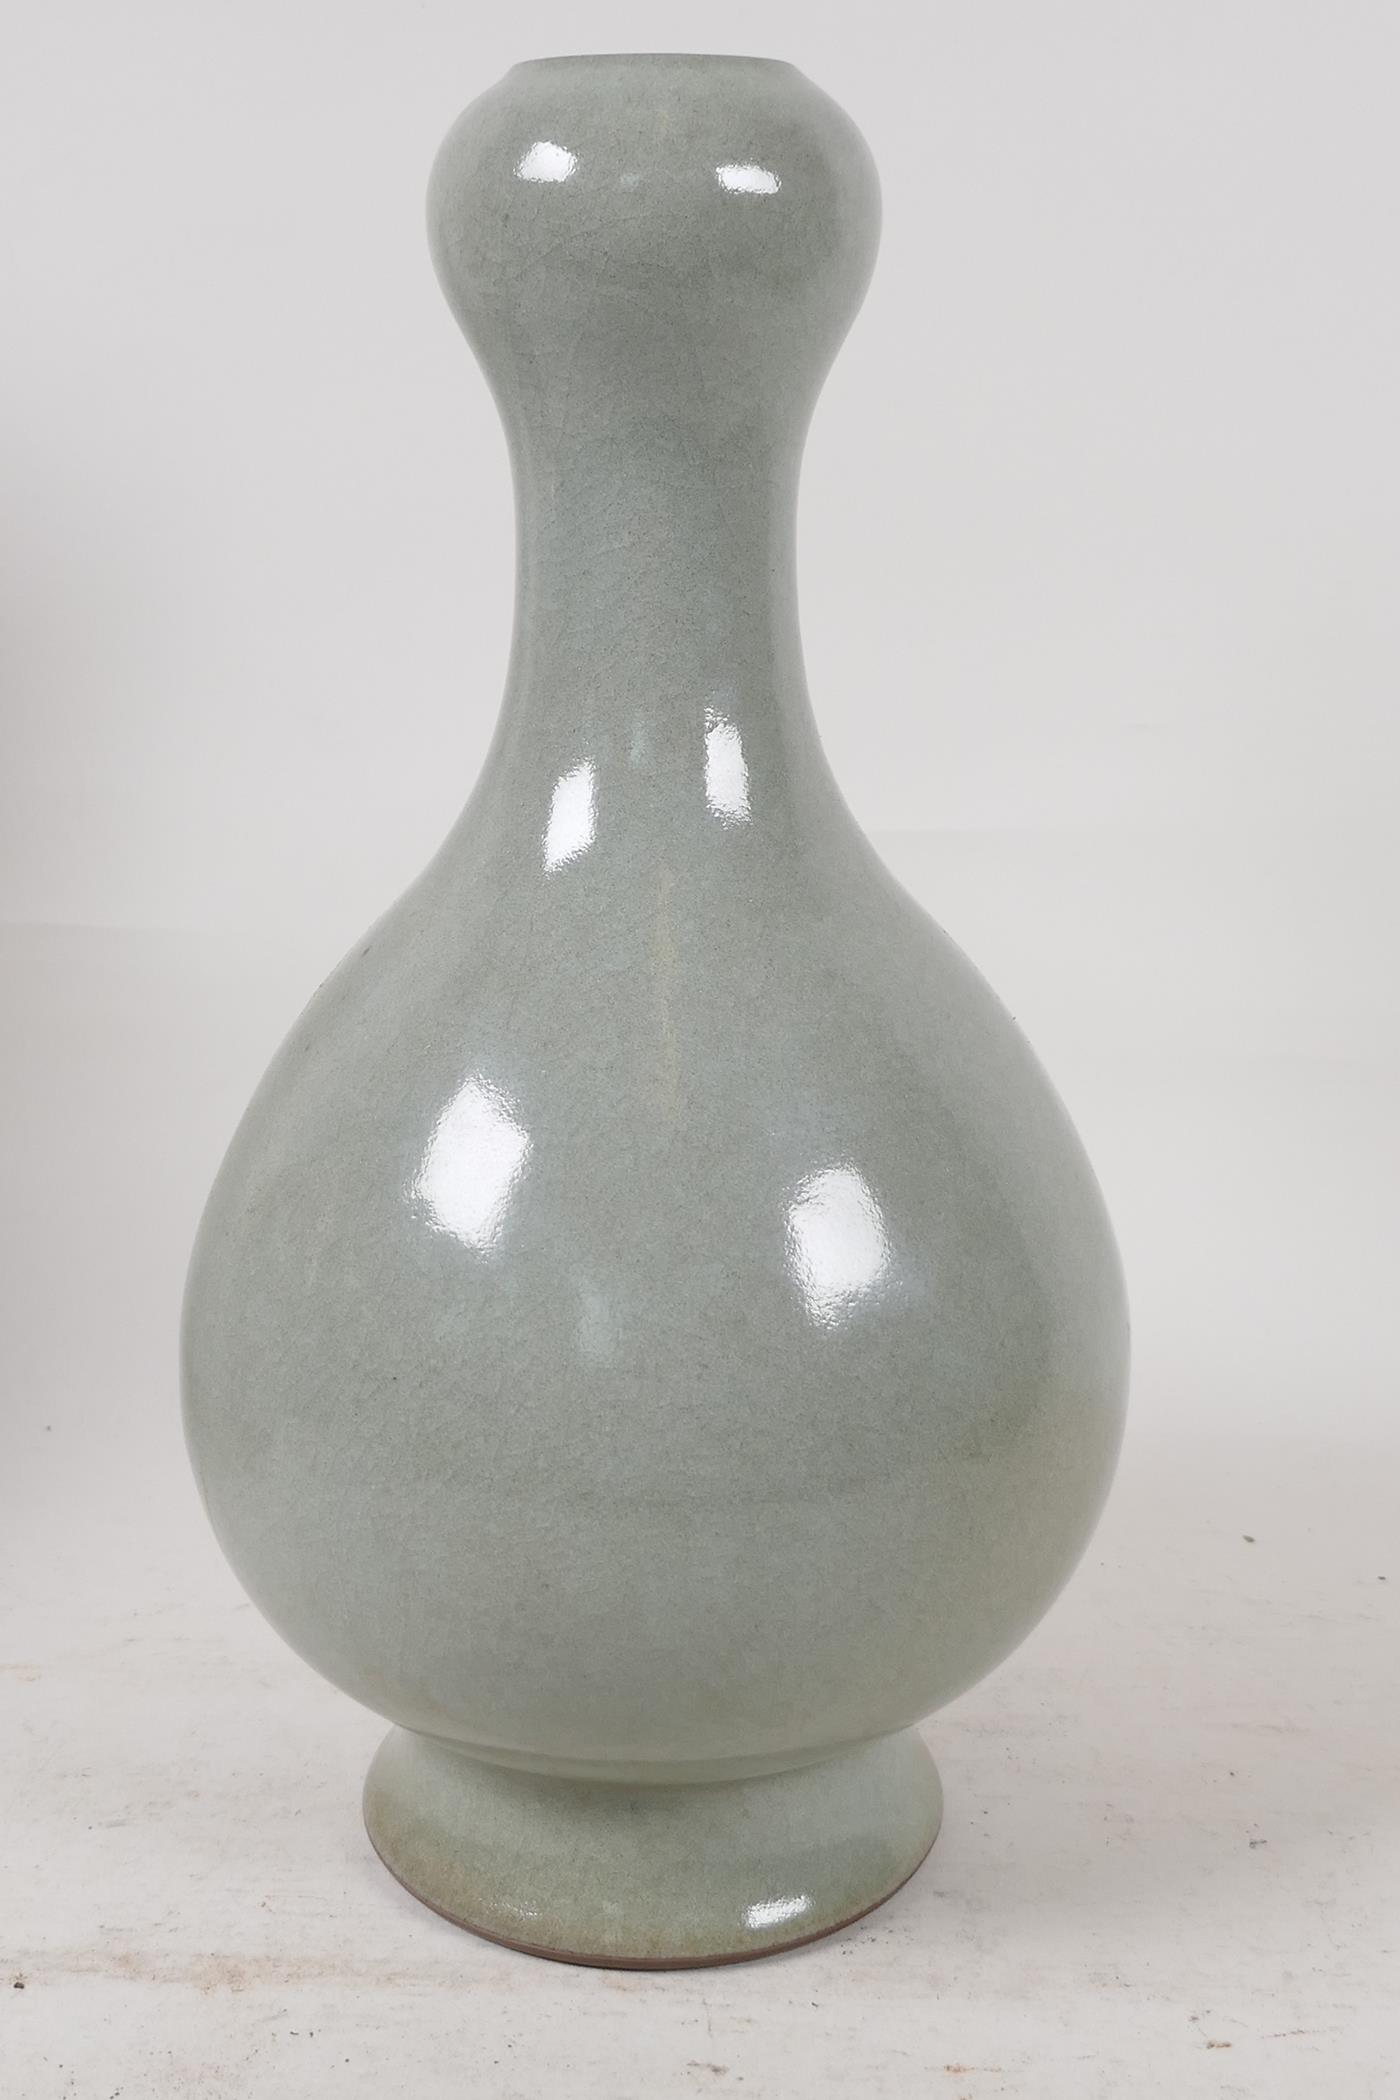 A Chinese Ru ware style celadon crackle glazed garlic head vase, 11" high